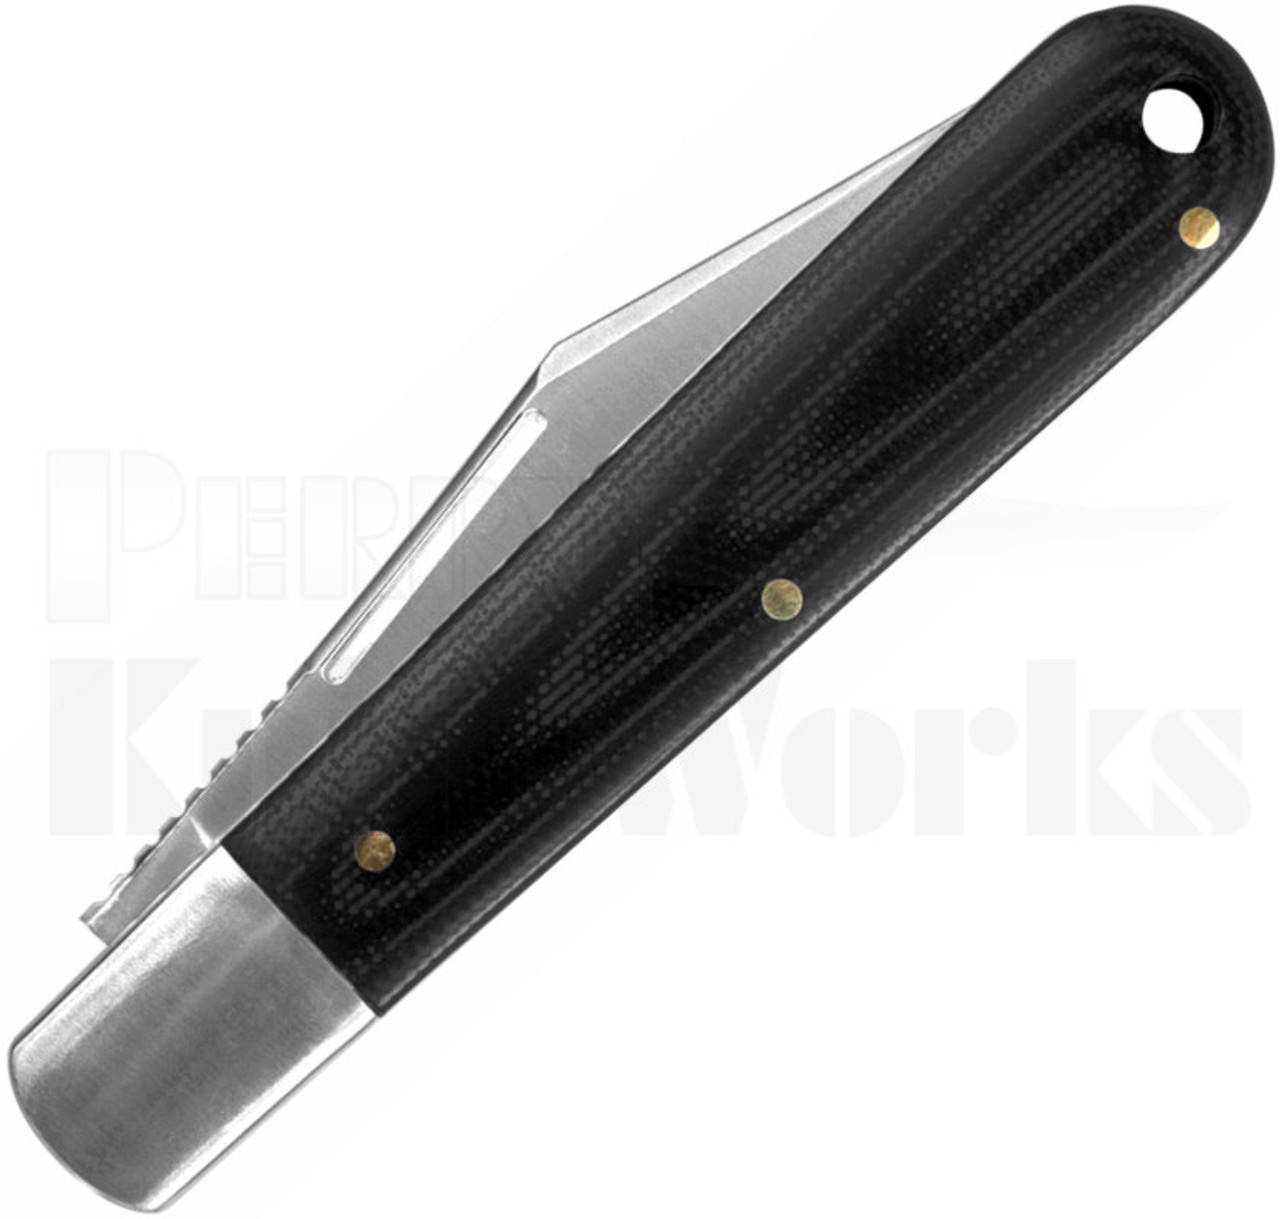 Kershaw Culpepper Slip Joint Knife Black G-10 l Model 4383 l For Sale